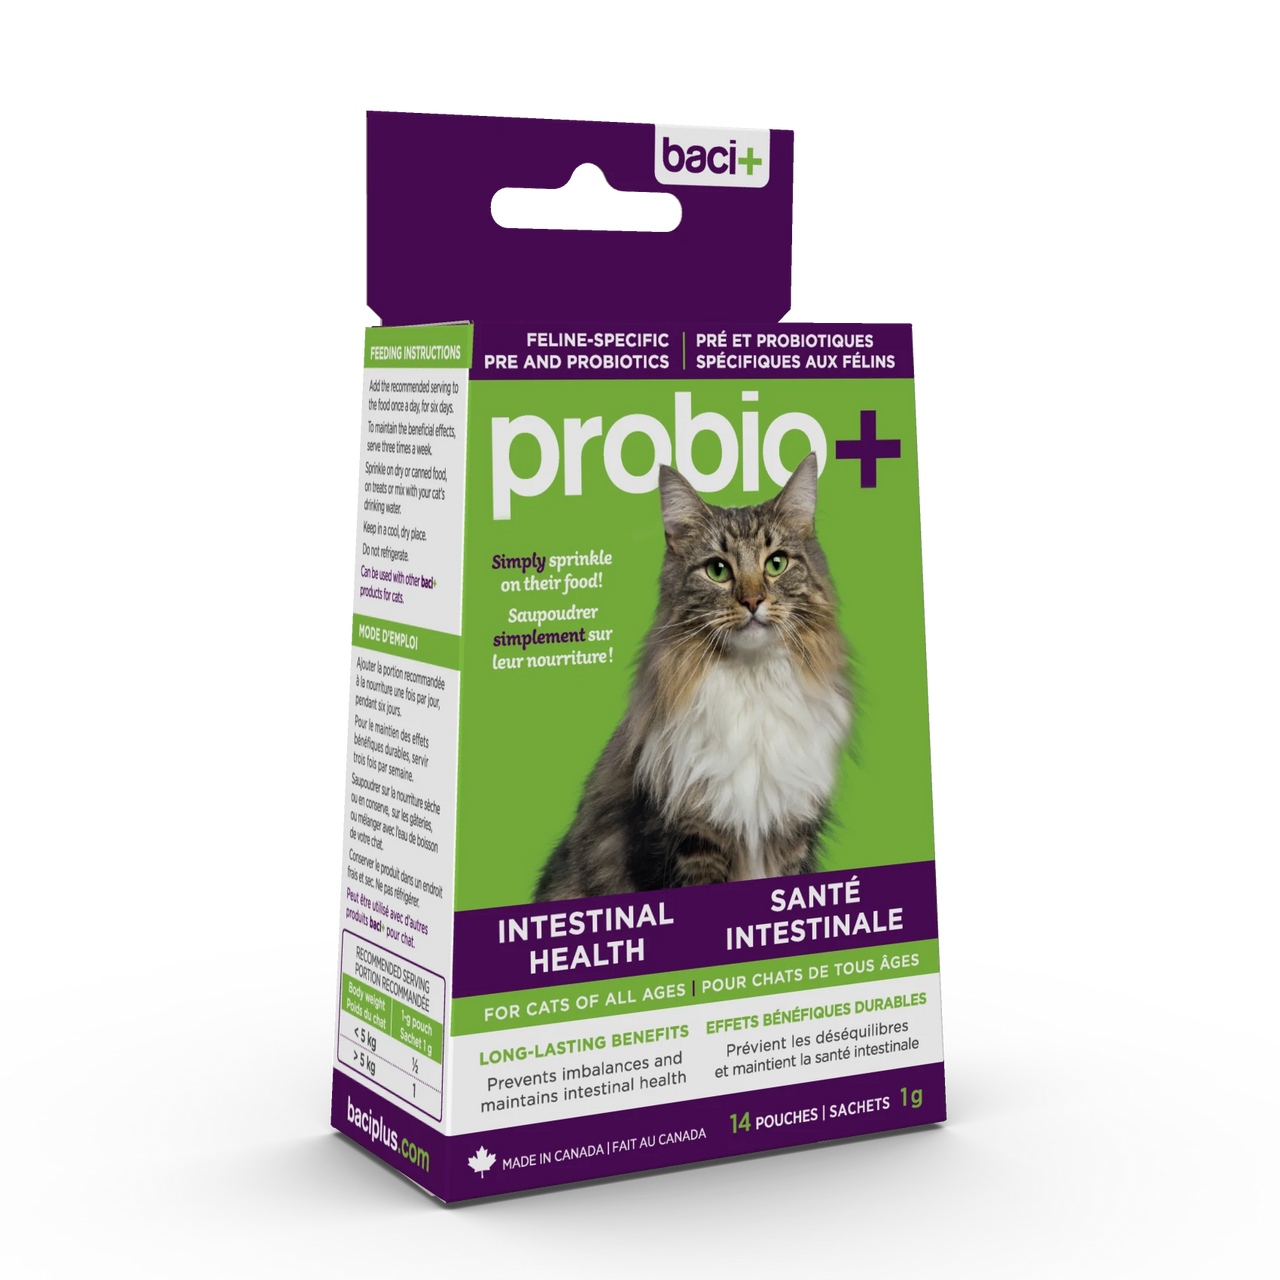 Baci+ Probio+ for Cats